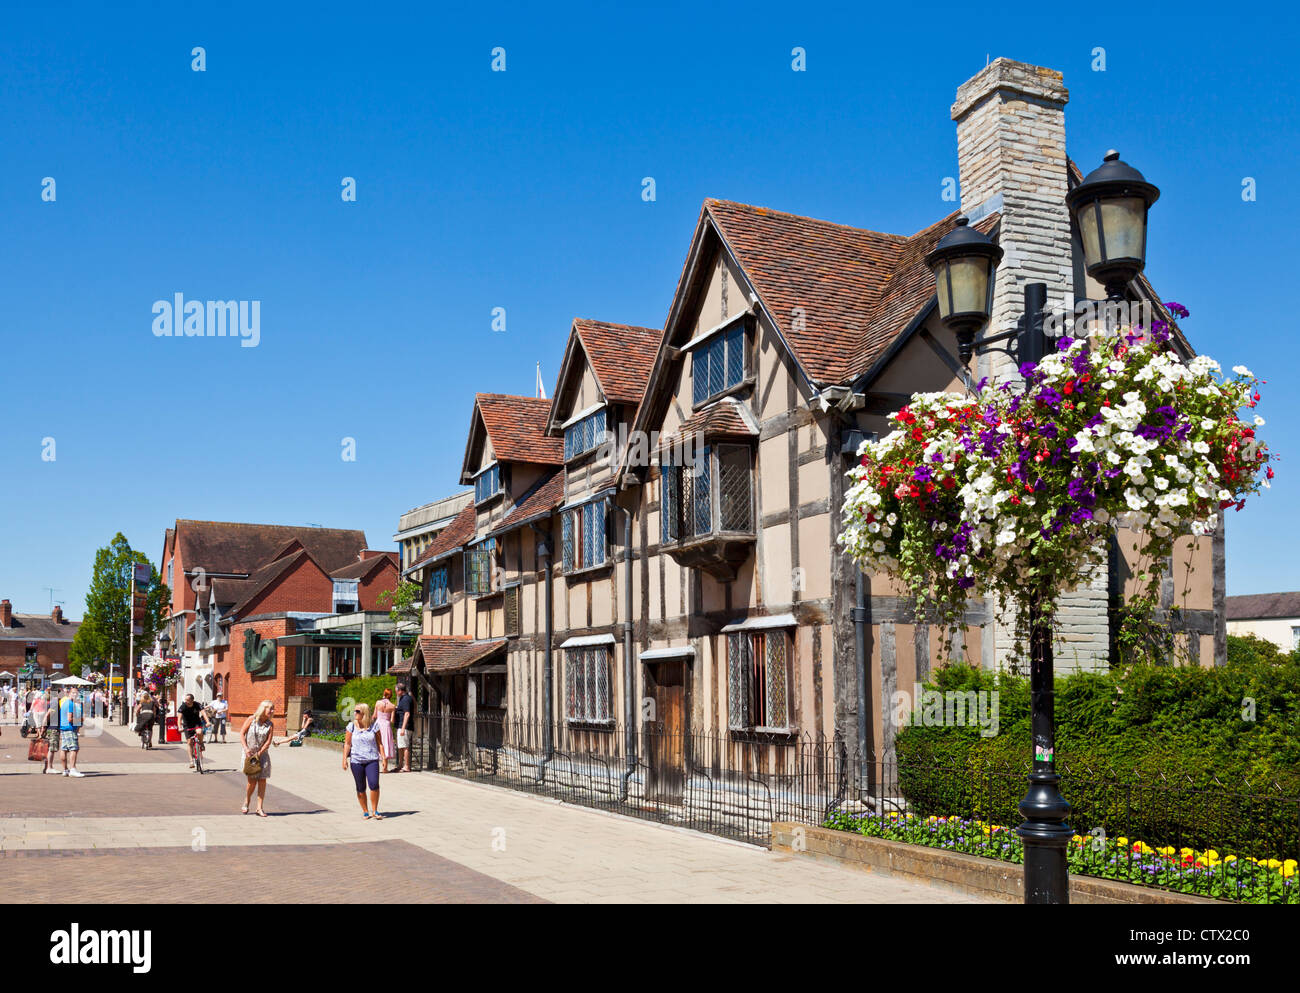 William Shakespeare's birthplace town centre Stratford upon Avon town centre Warwickshire England UK GB EU Europe Stock Photo